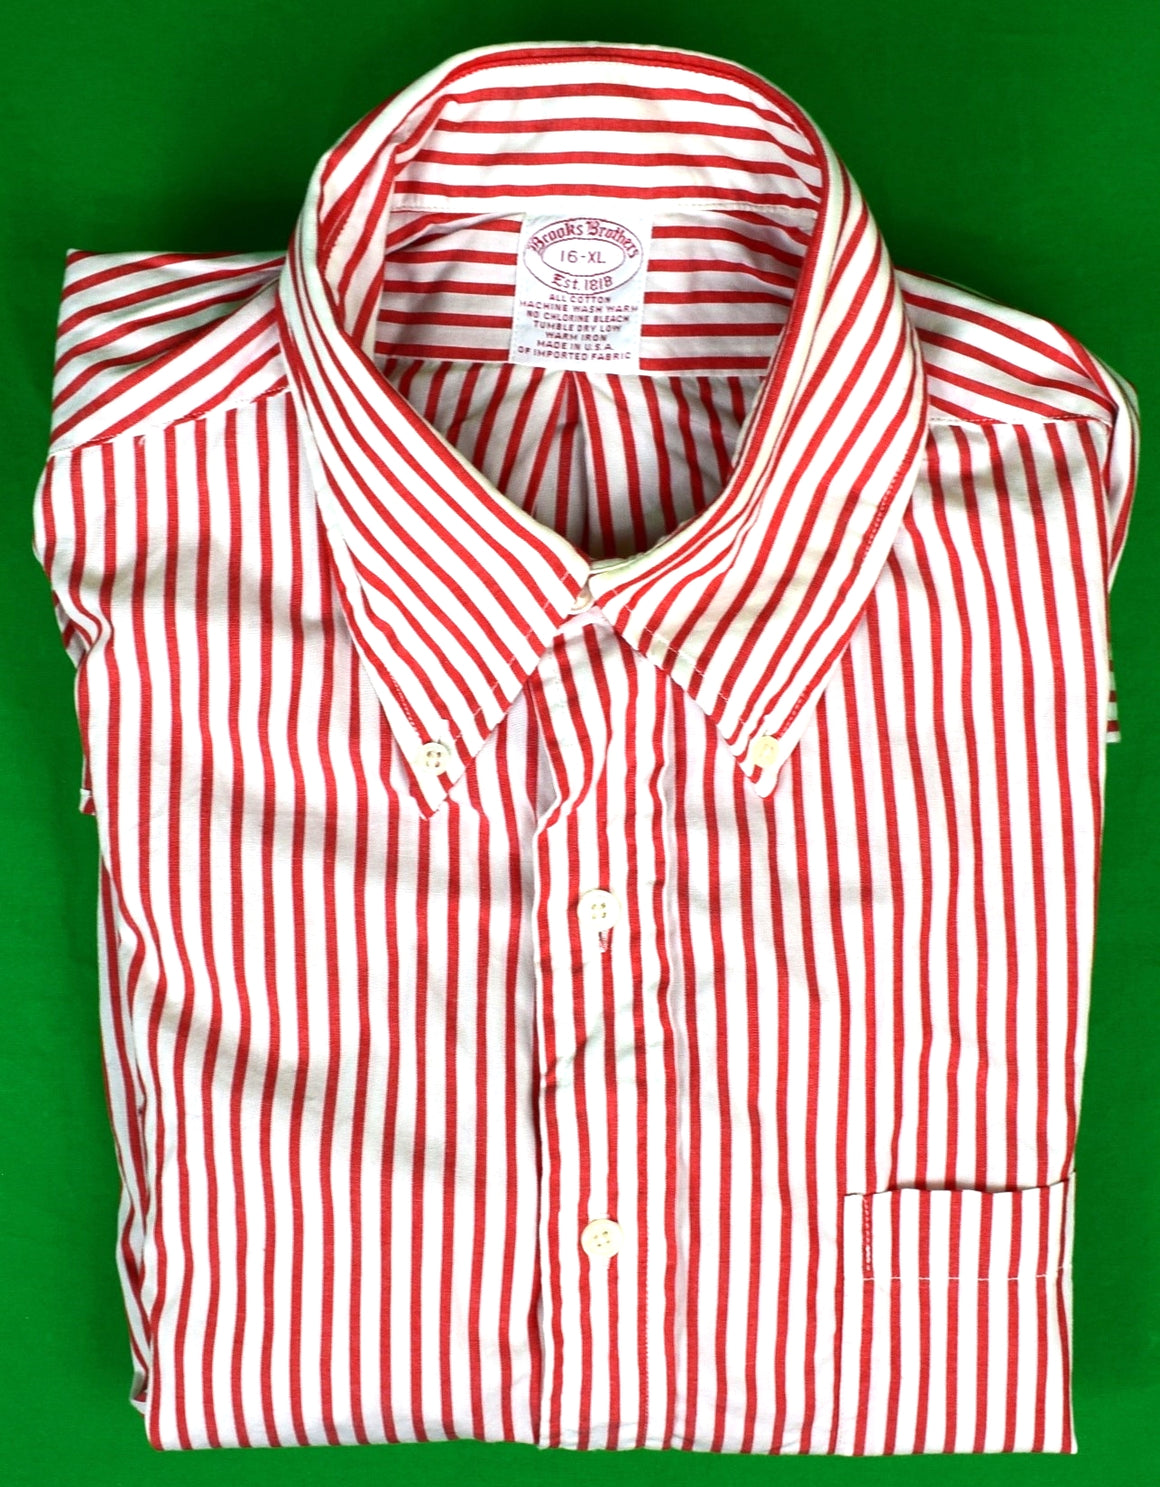 Brooks Brothers Bengal Stripe Red Broadcloth BD Shirt Sz 16-XL